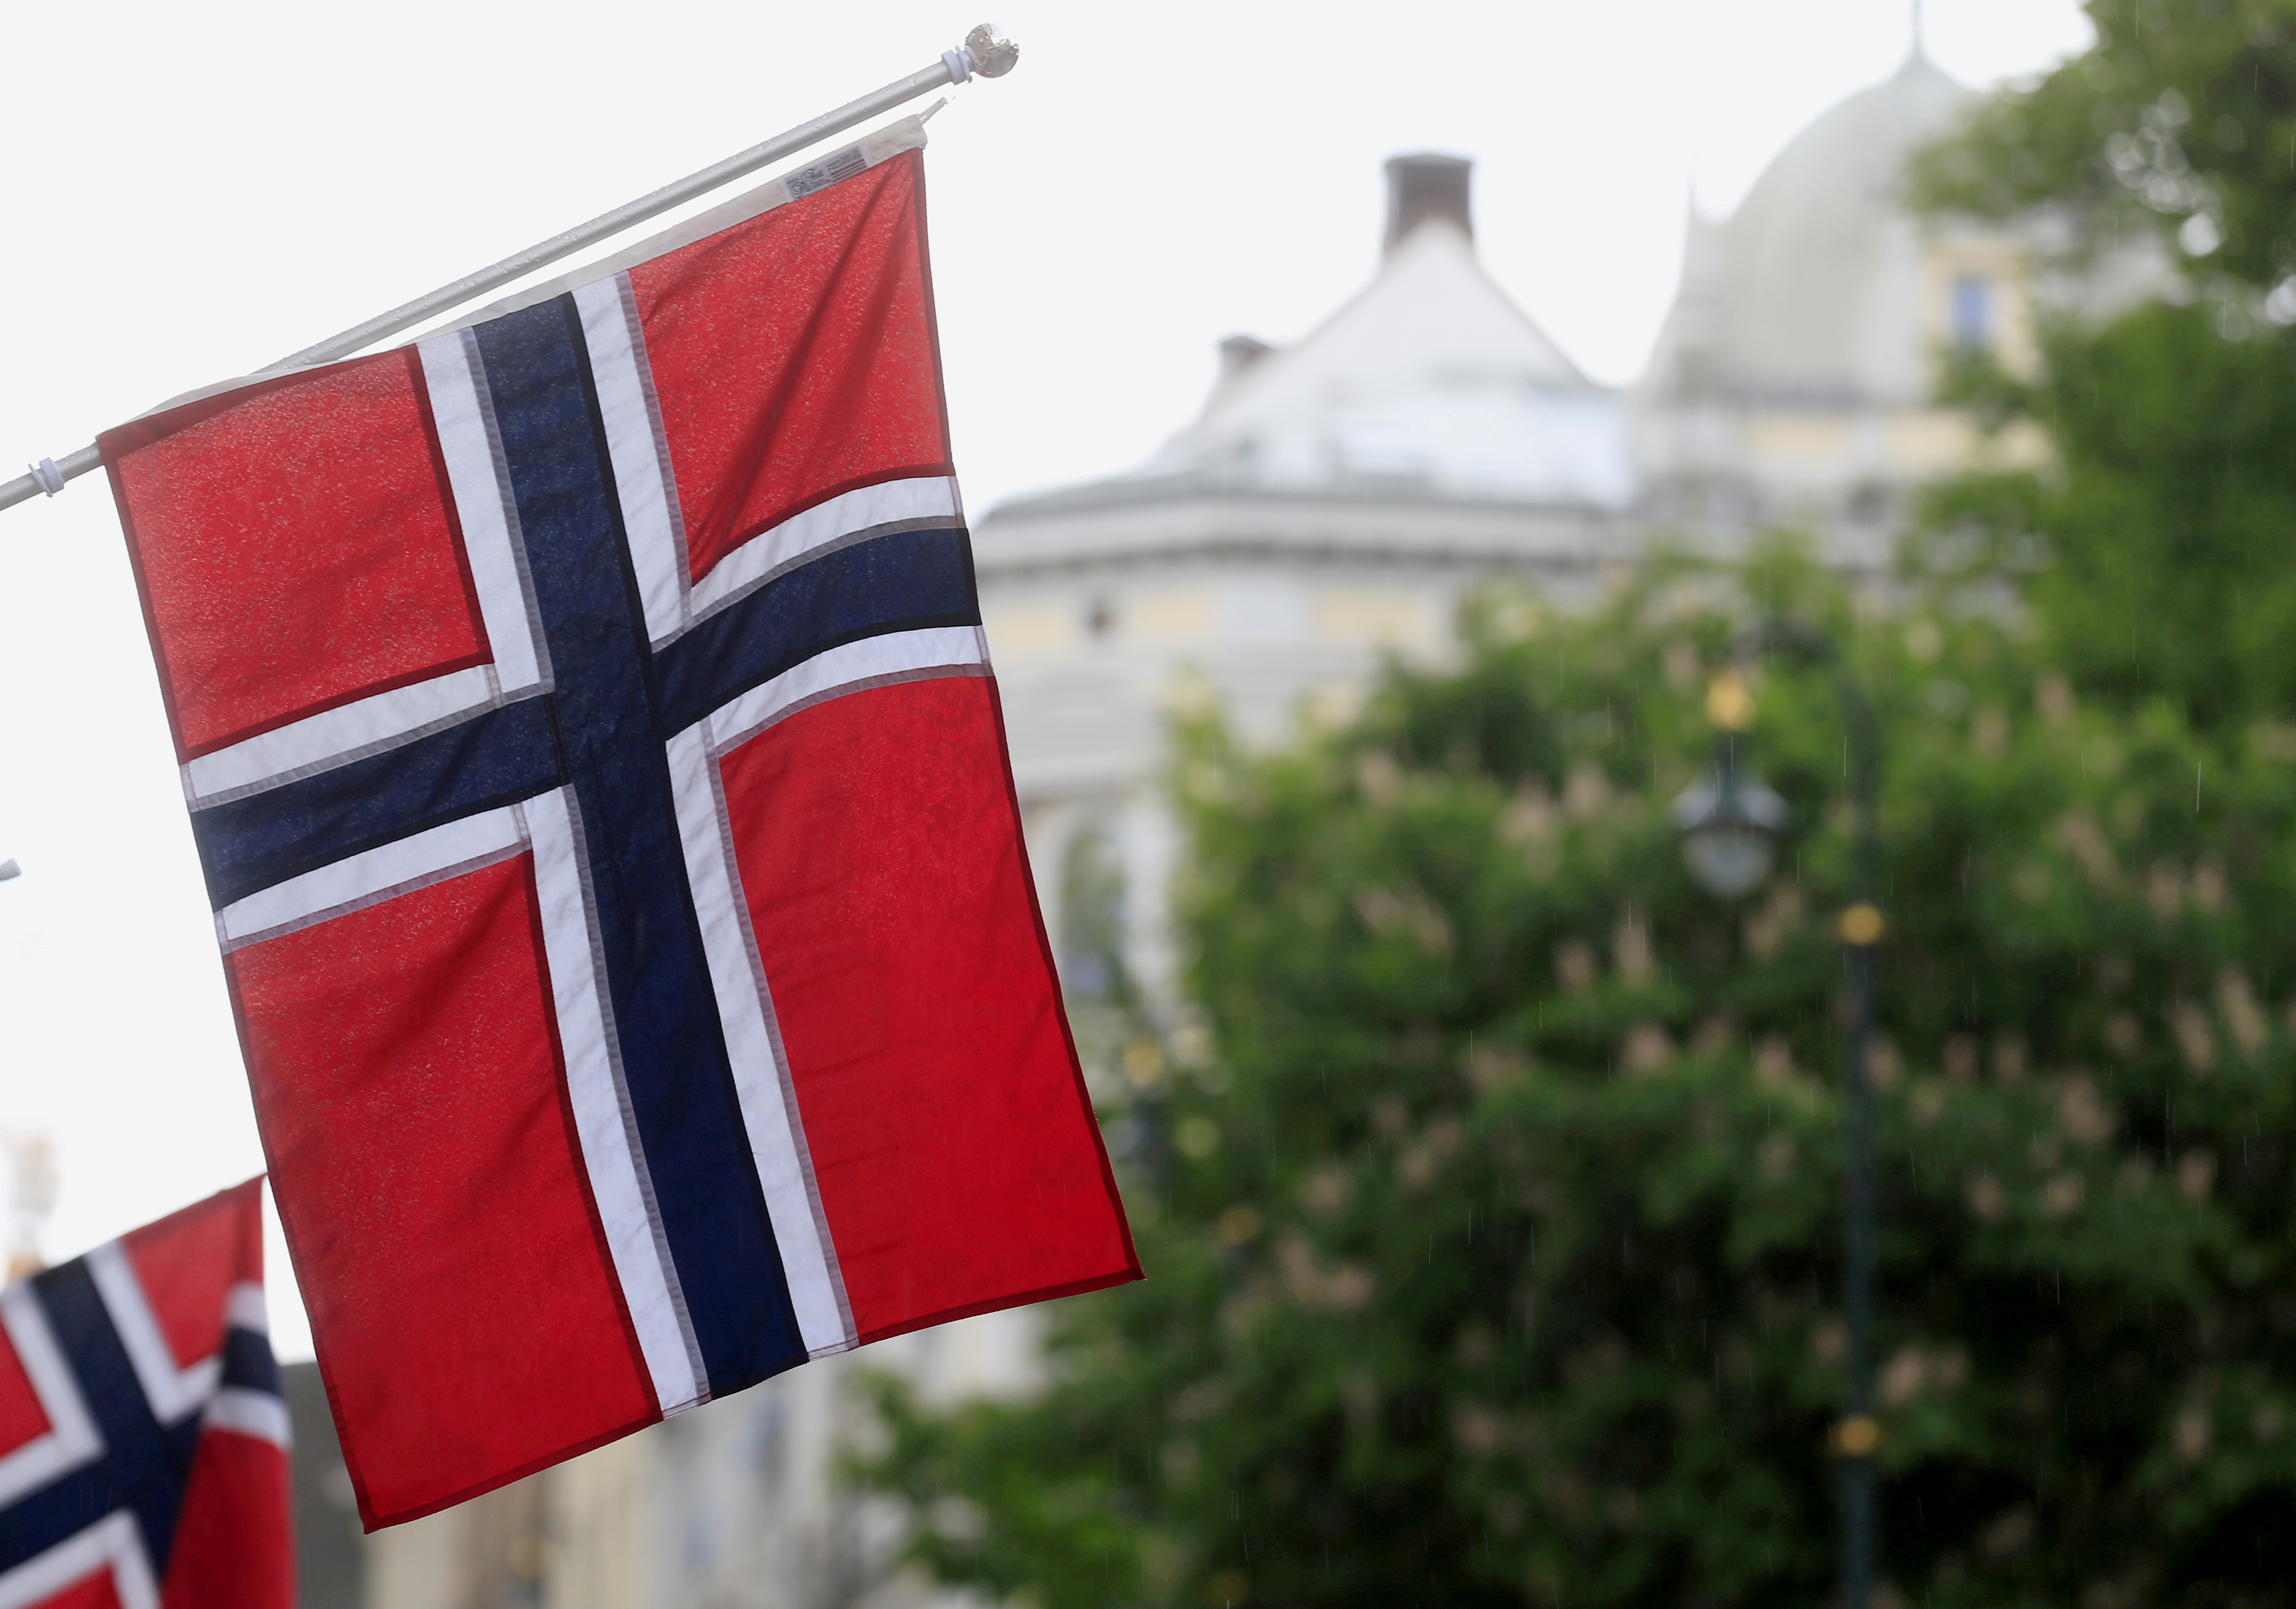 Norwegian flags flutter at Karl Johans street in Oslo, Norway